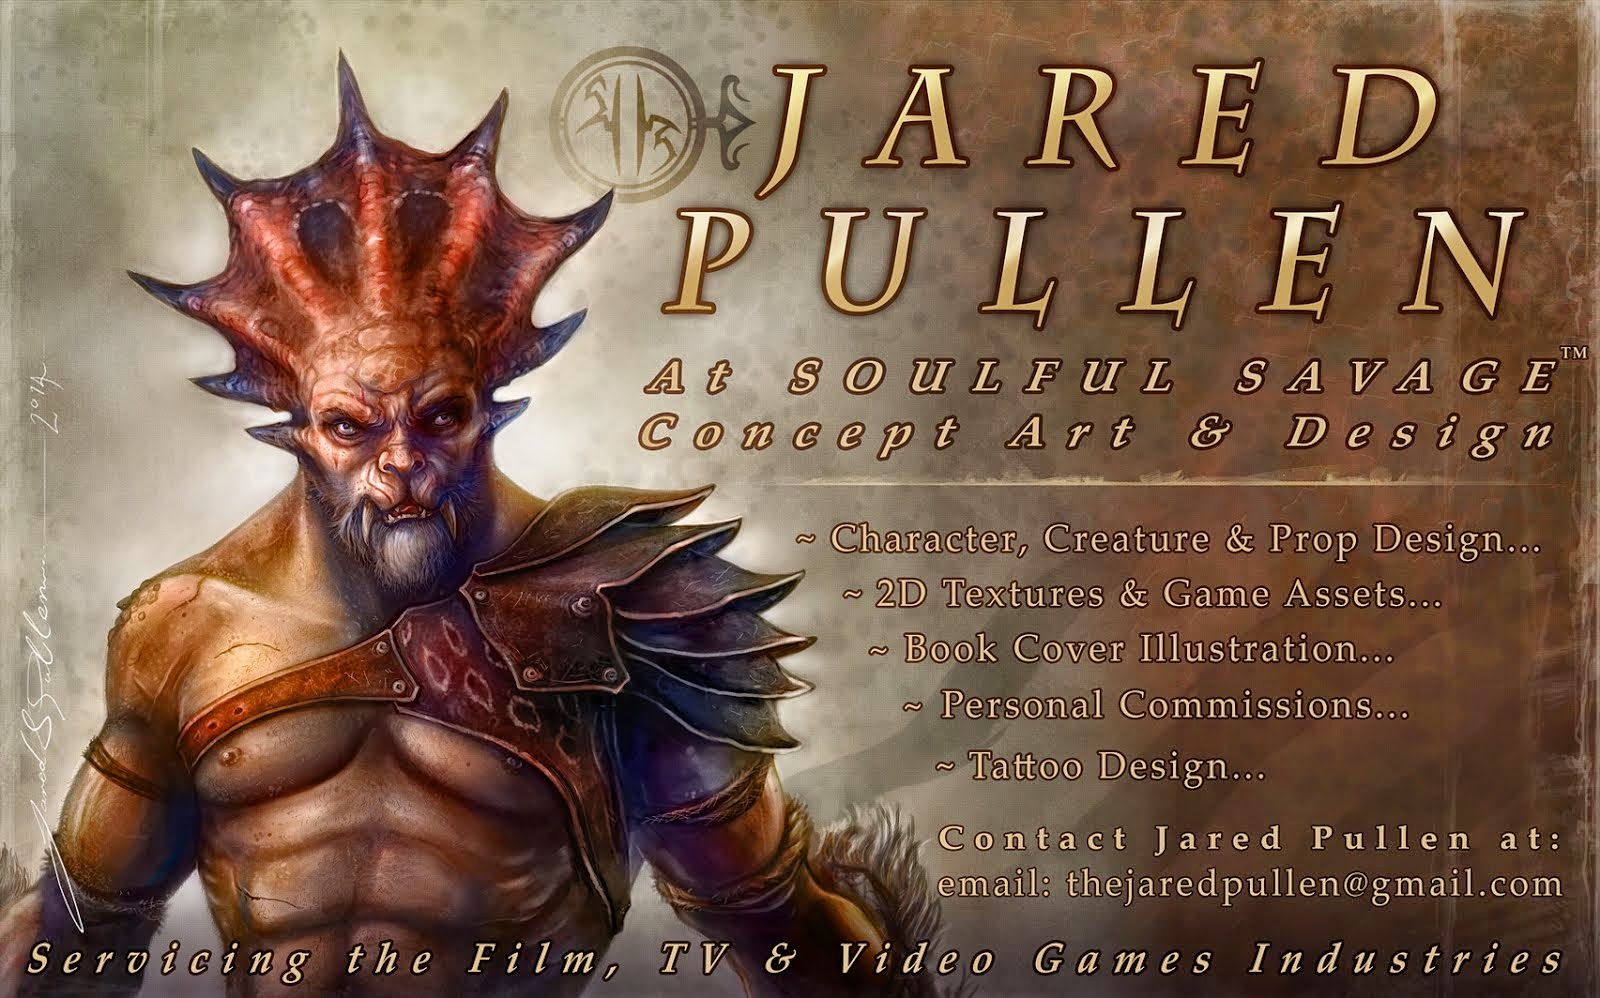 Jared Pullen Soulful Savage Concept Art & Design